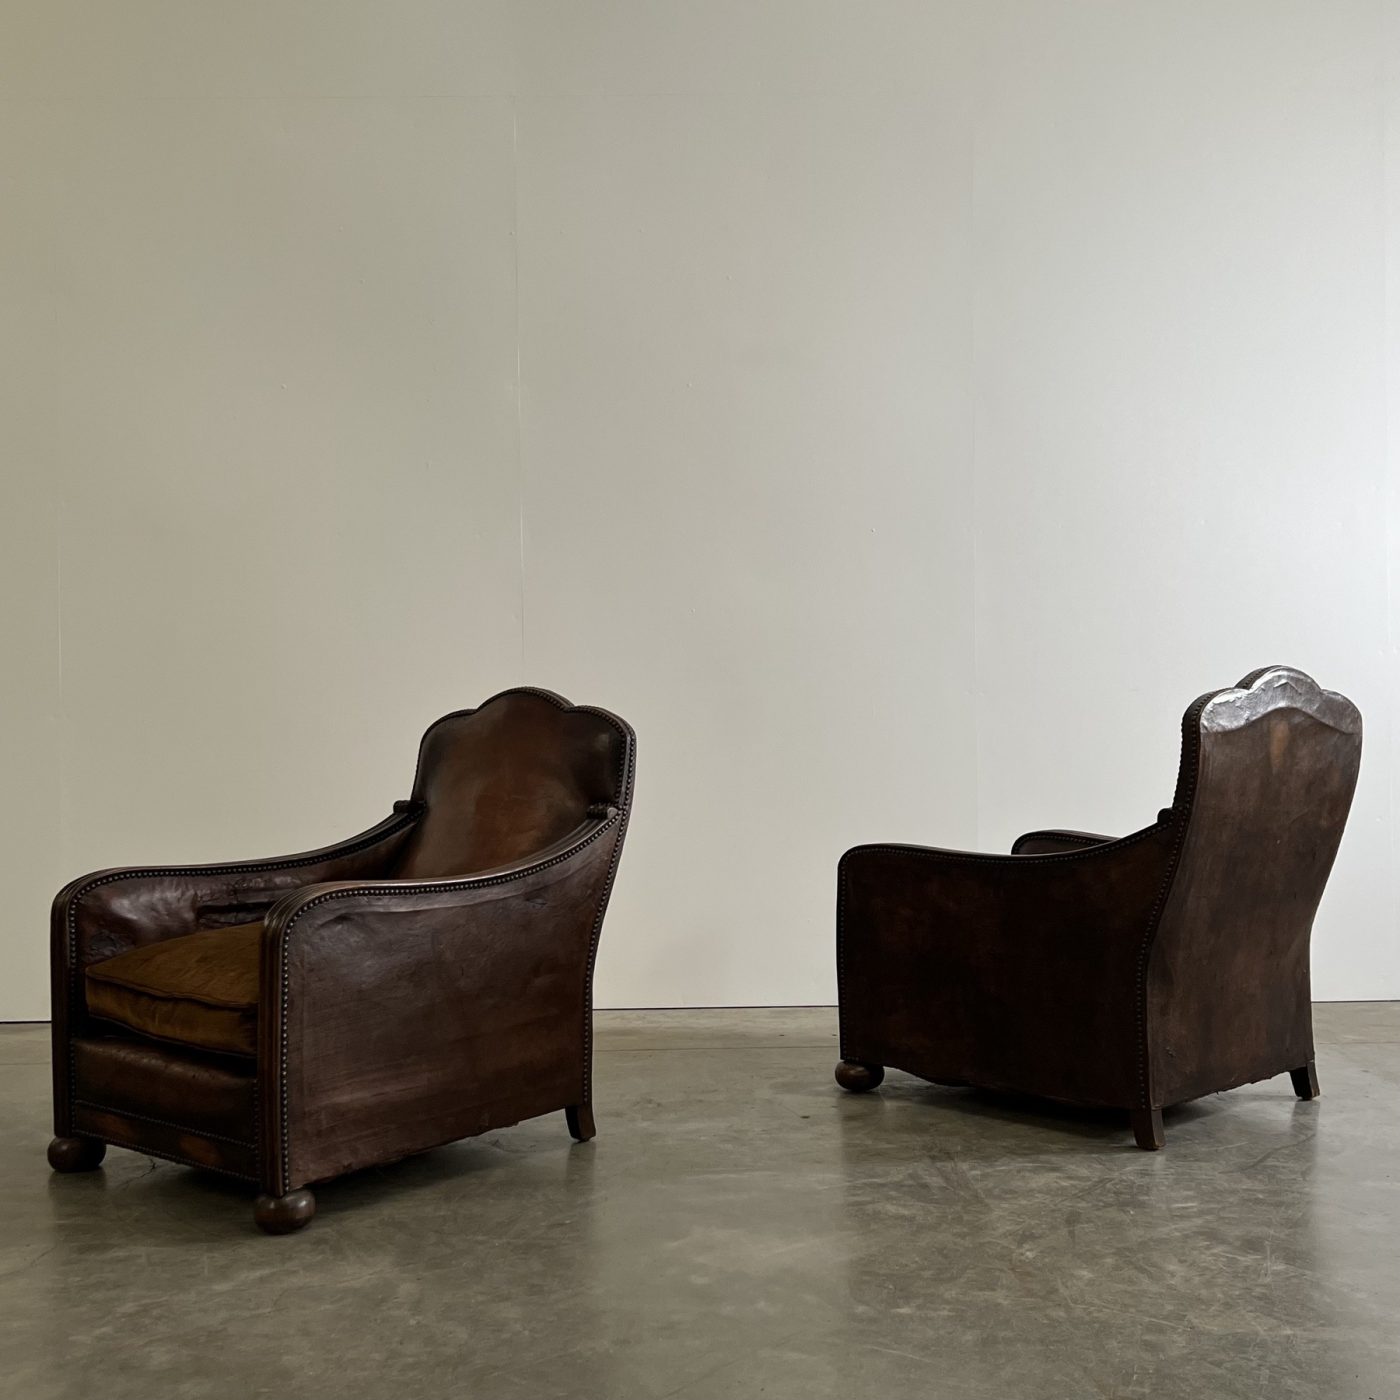 objet-vagabond-leather-armchairs0002